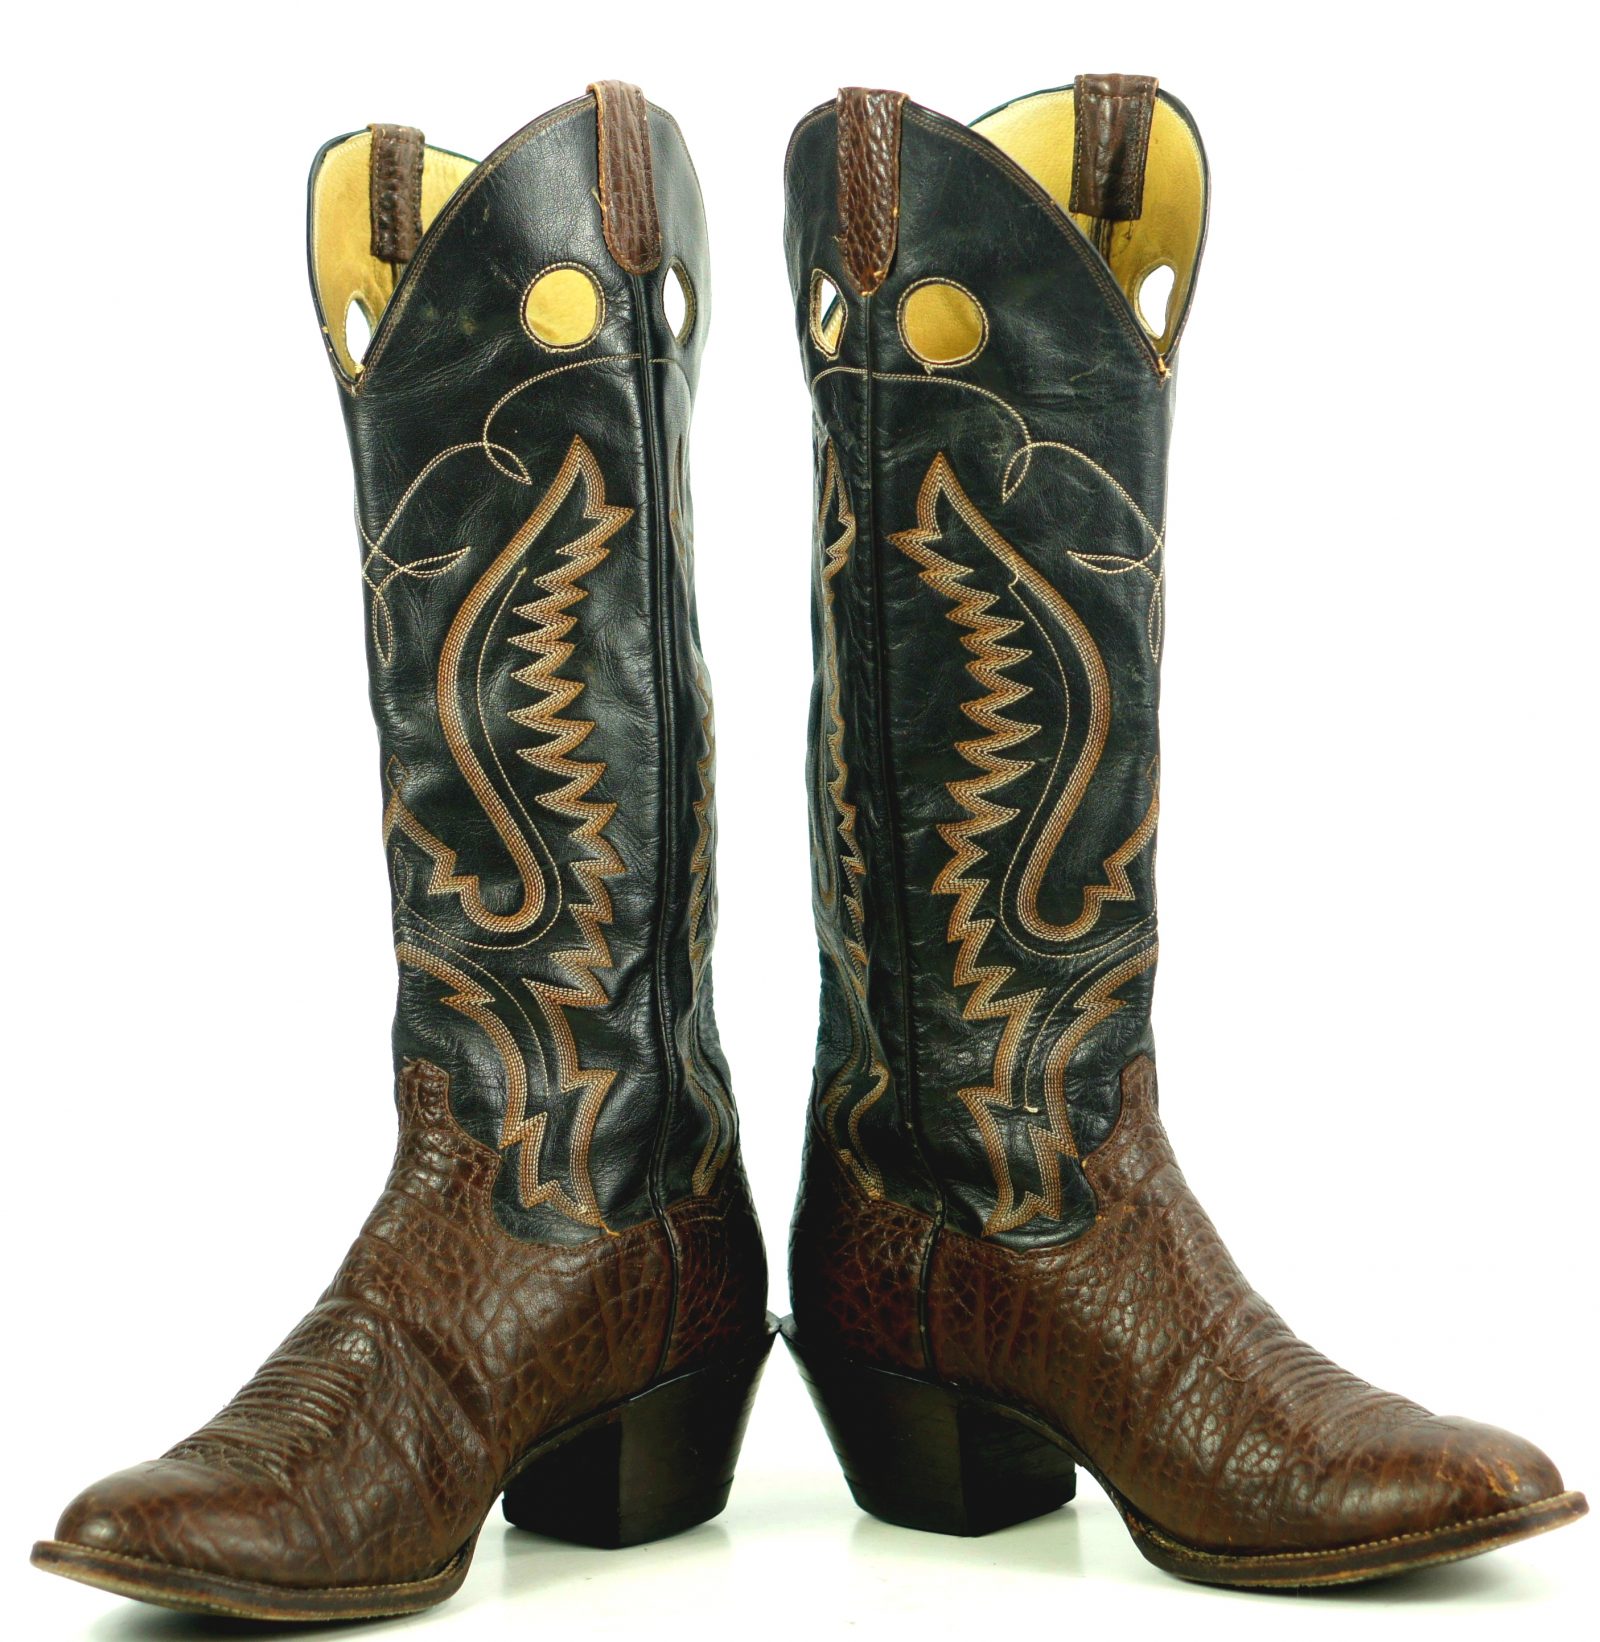 Sanders Knee Hi Buckaroo 18 Tall Cowboy Western Boots Handcrafted Men